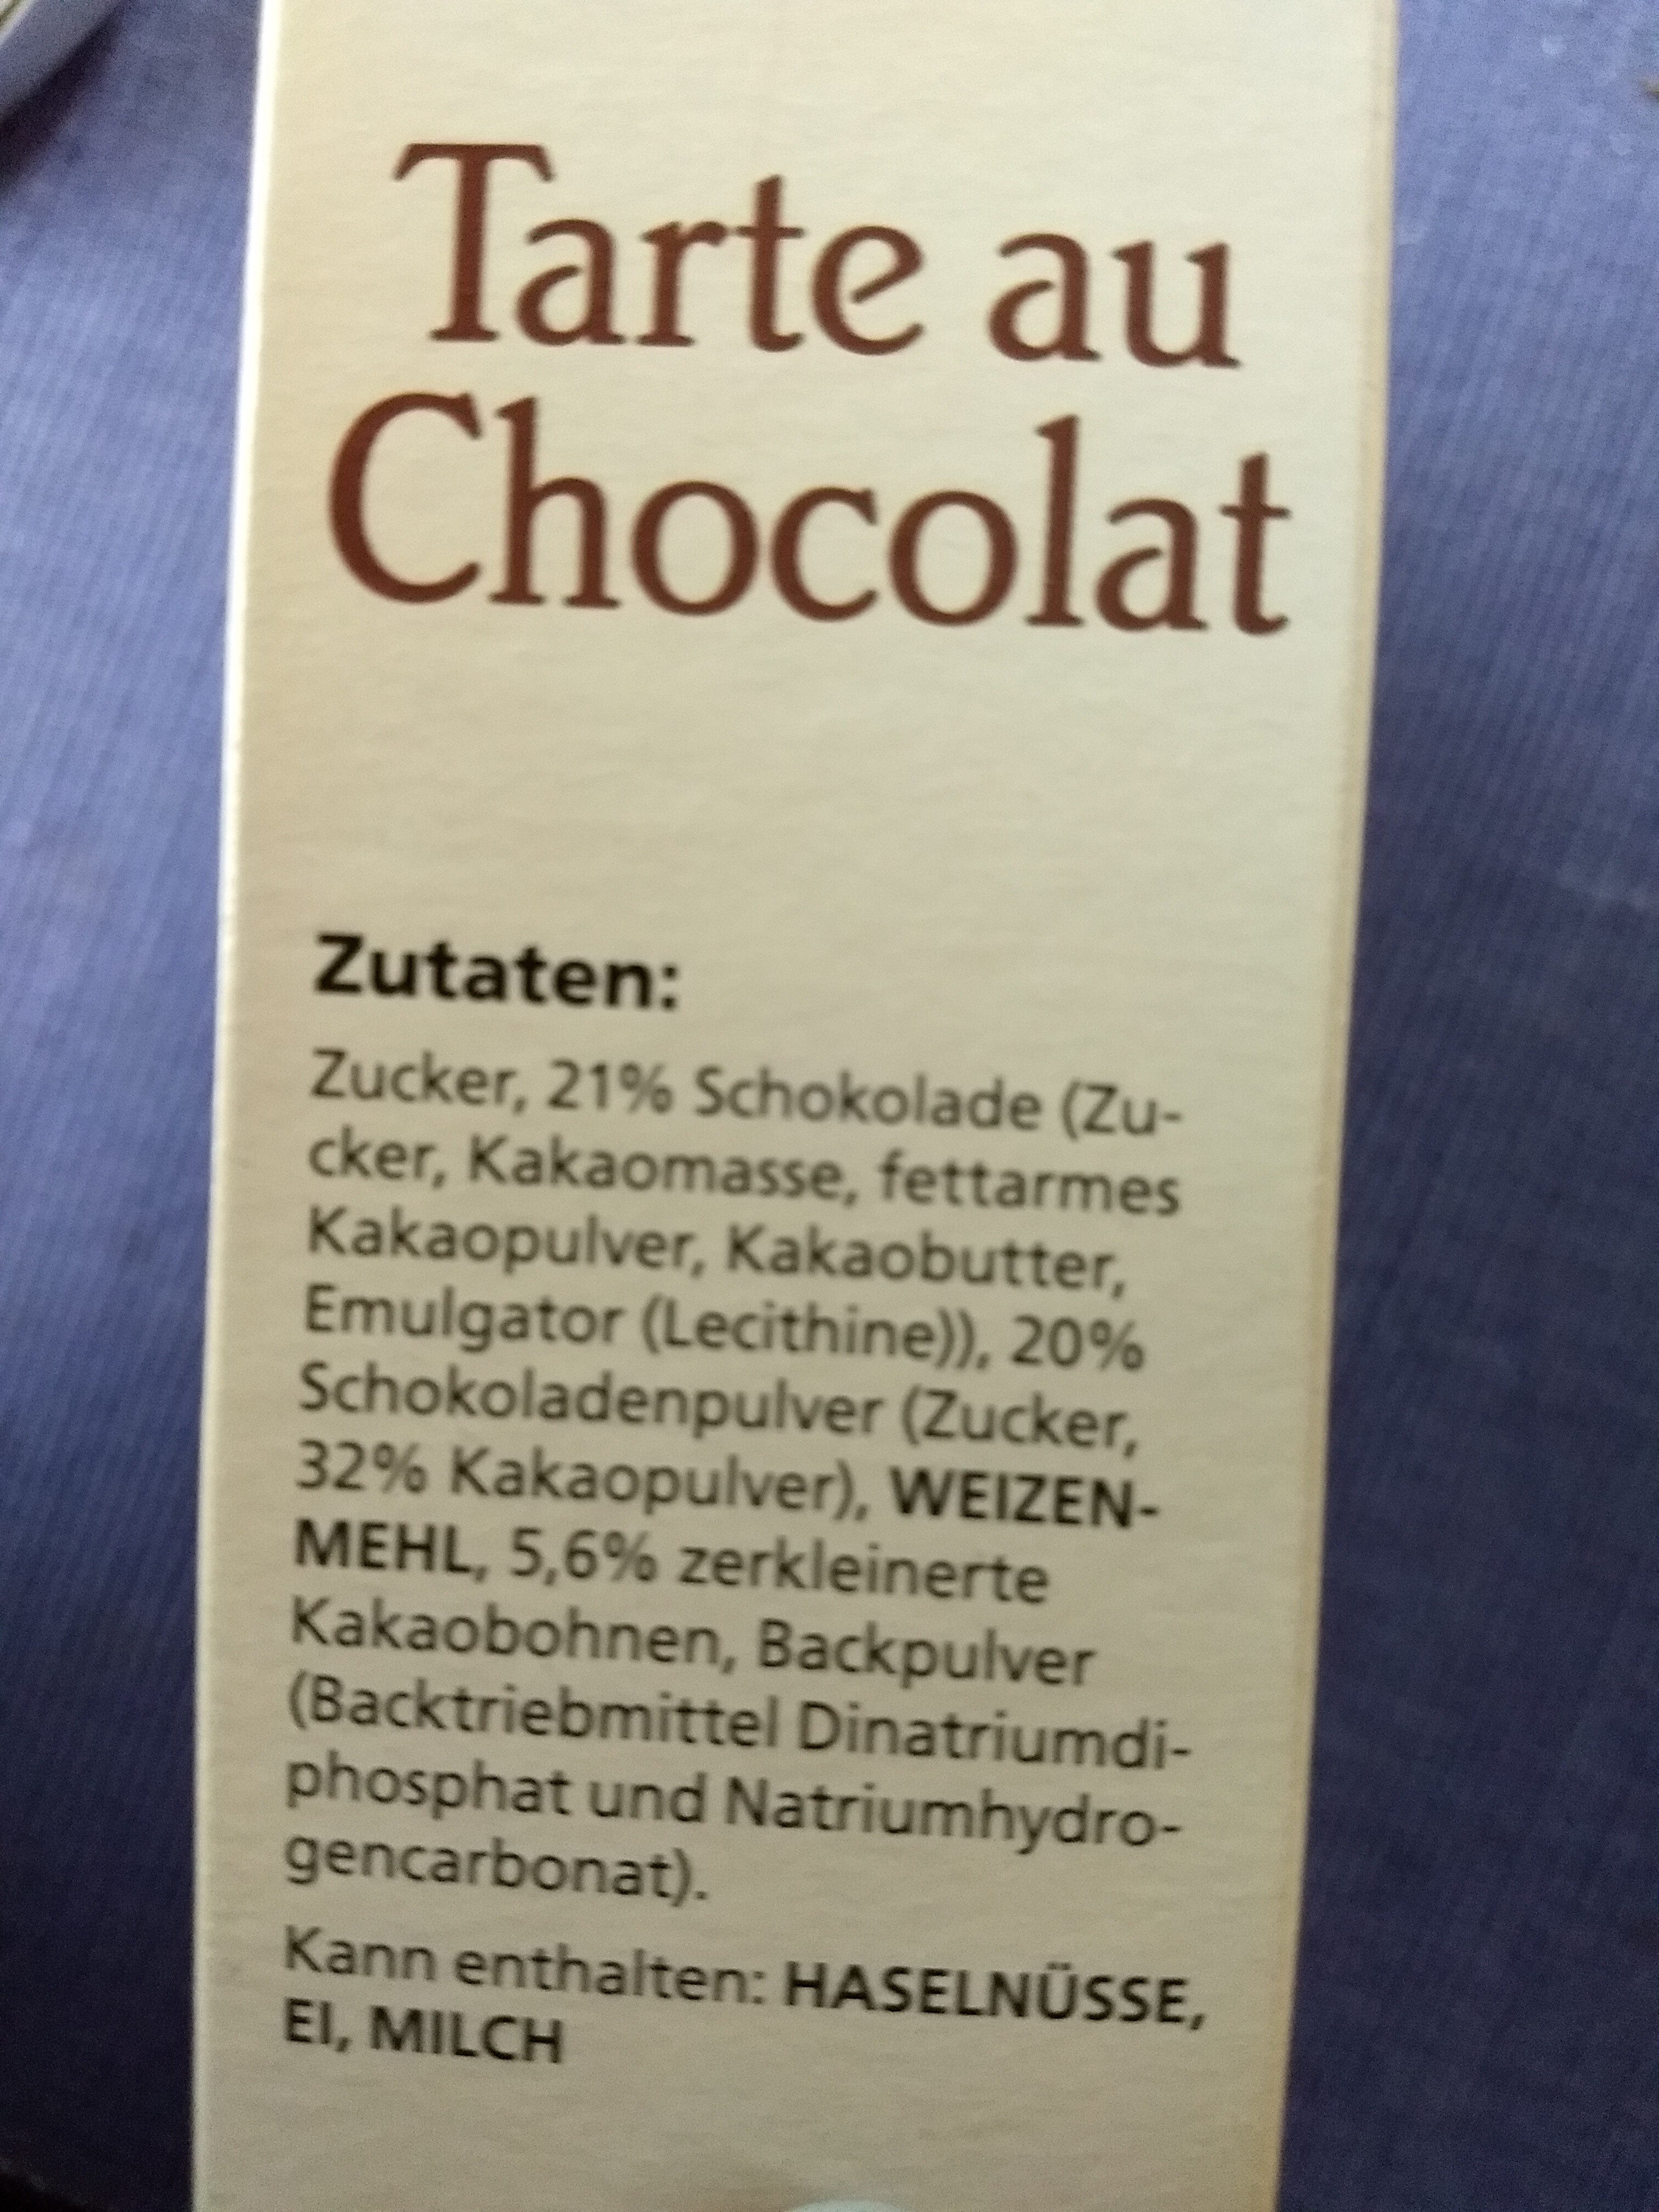 Tarte au Chocolat - Ingredients - de